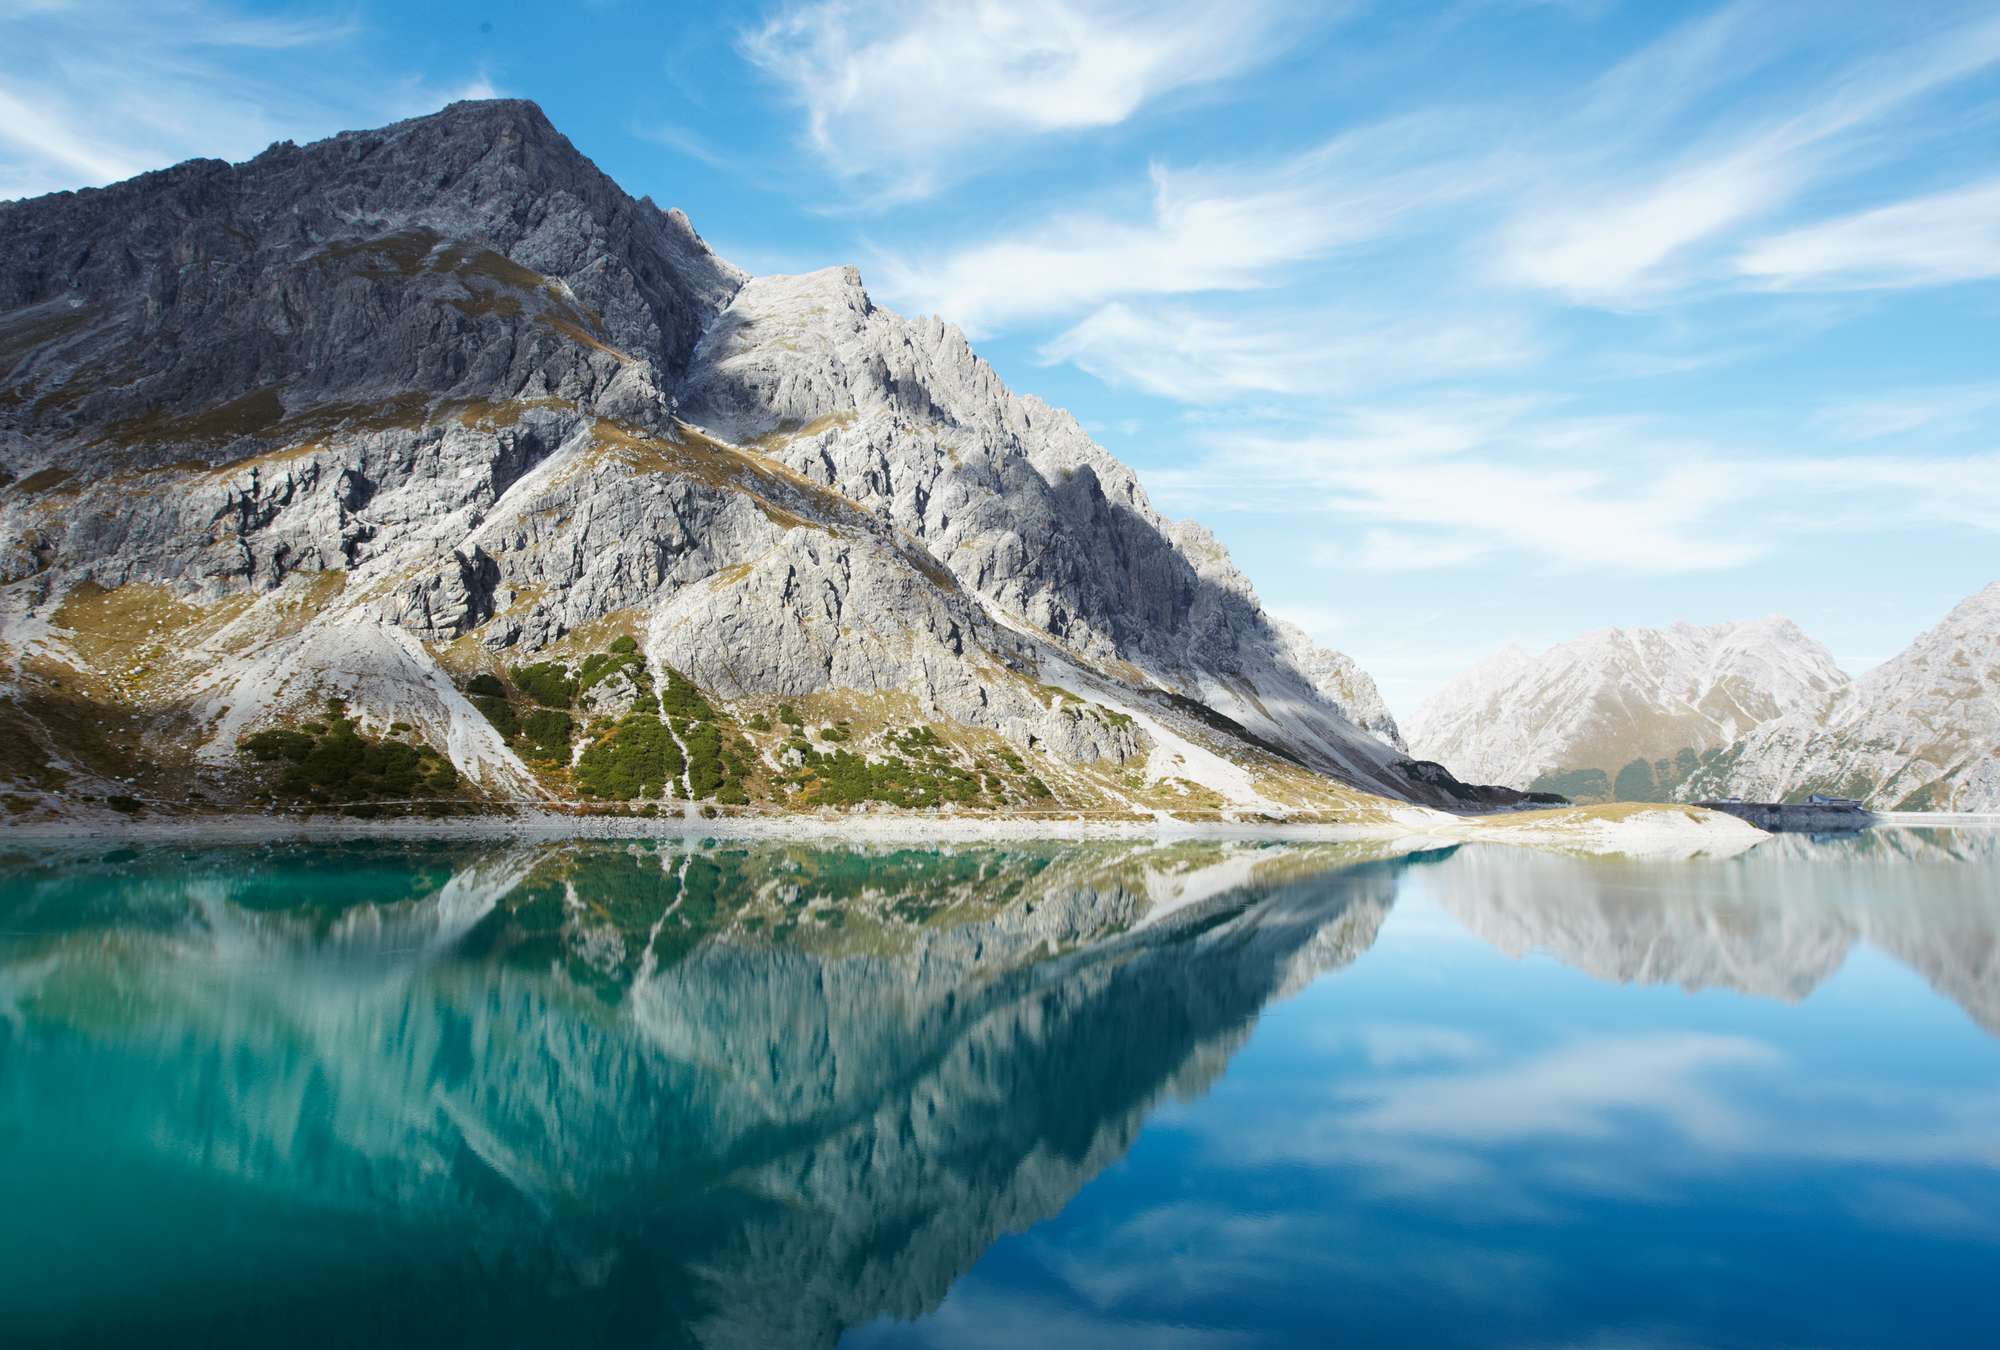             Bergsee klar – Fototapete mit natürlichem Bergpanorama
        